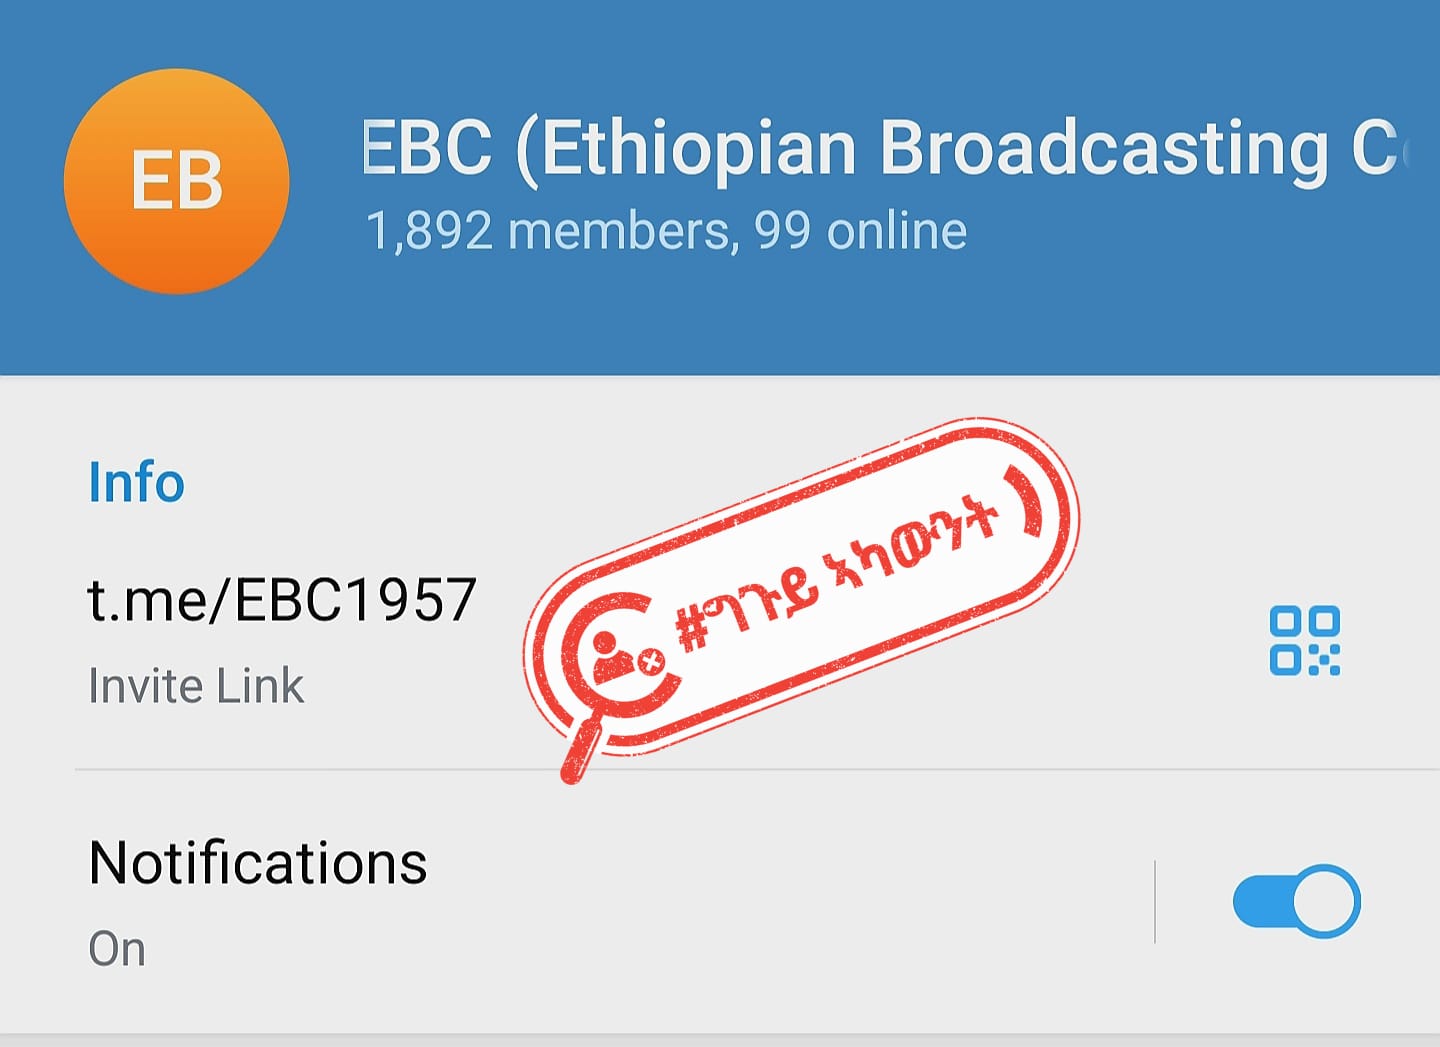 A fraudulent Telegram account was created under the name "EBC."